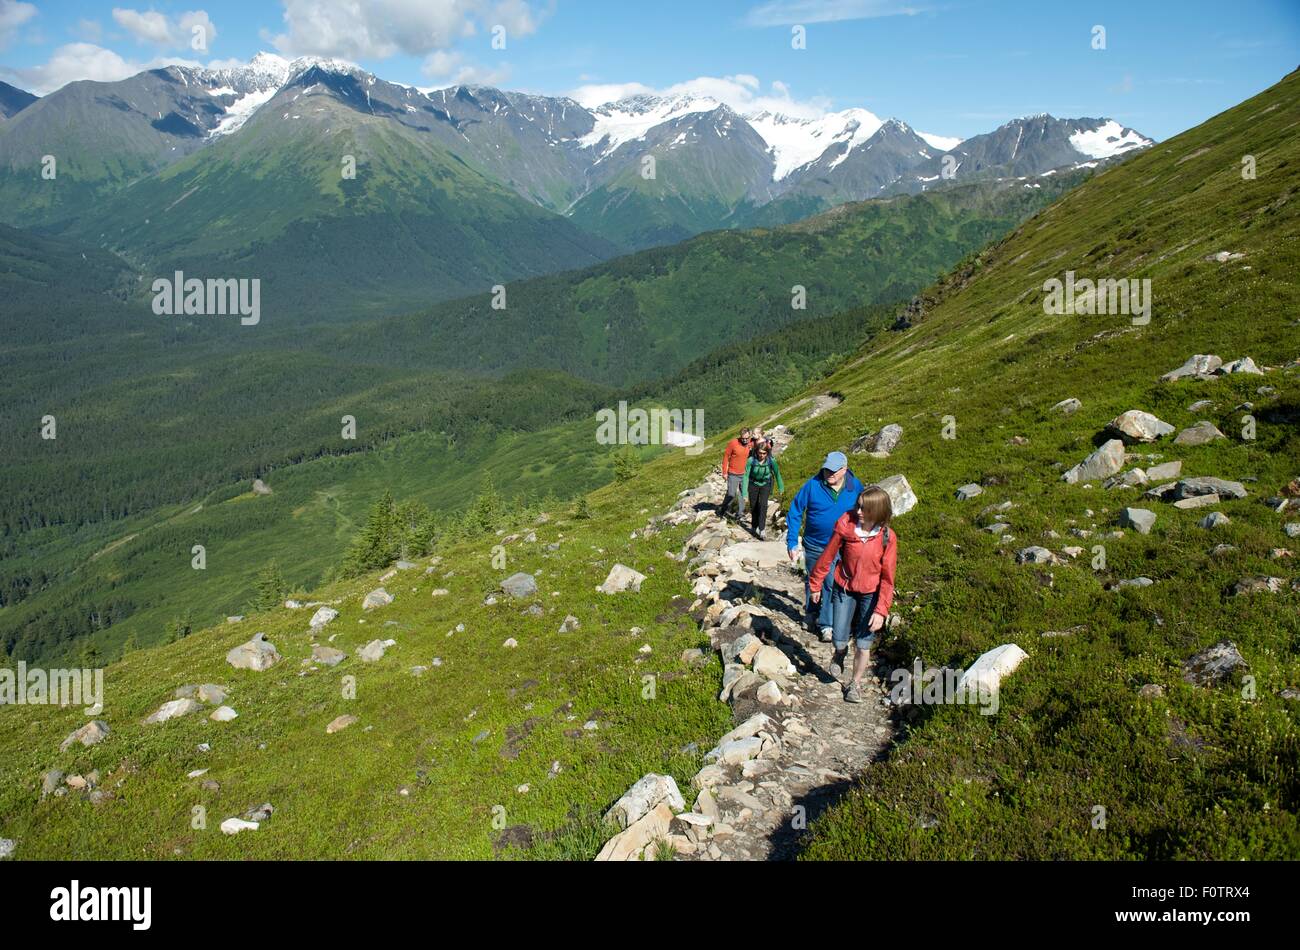 People hiking, North Face Trail, Alyeska Resort, seven glaciers, Winner Creek Valley, Turnagain Arm, Girdwood, Alaska, USA Stock Photo